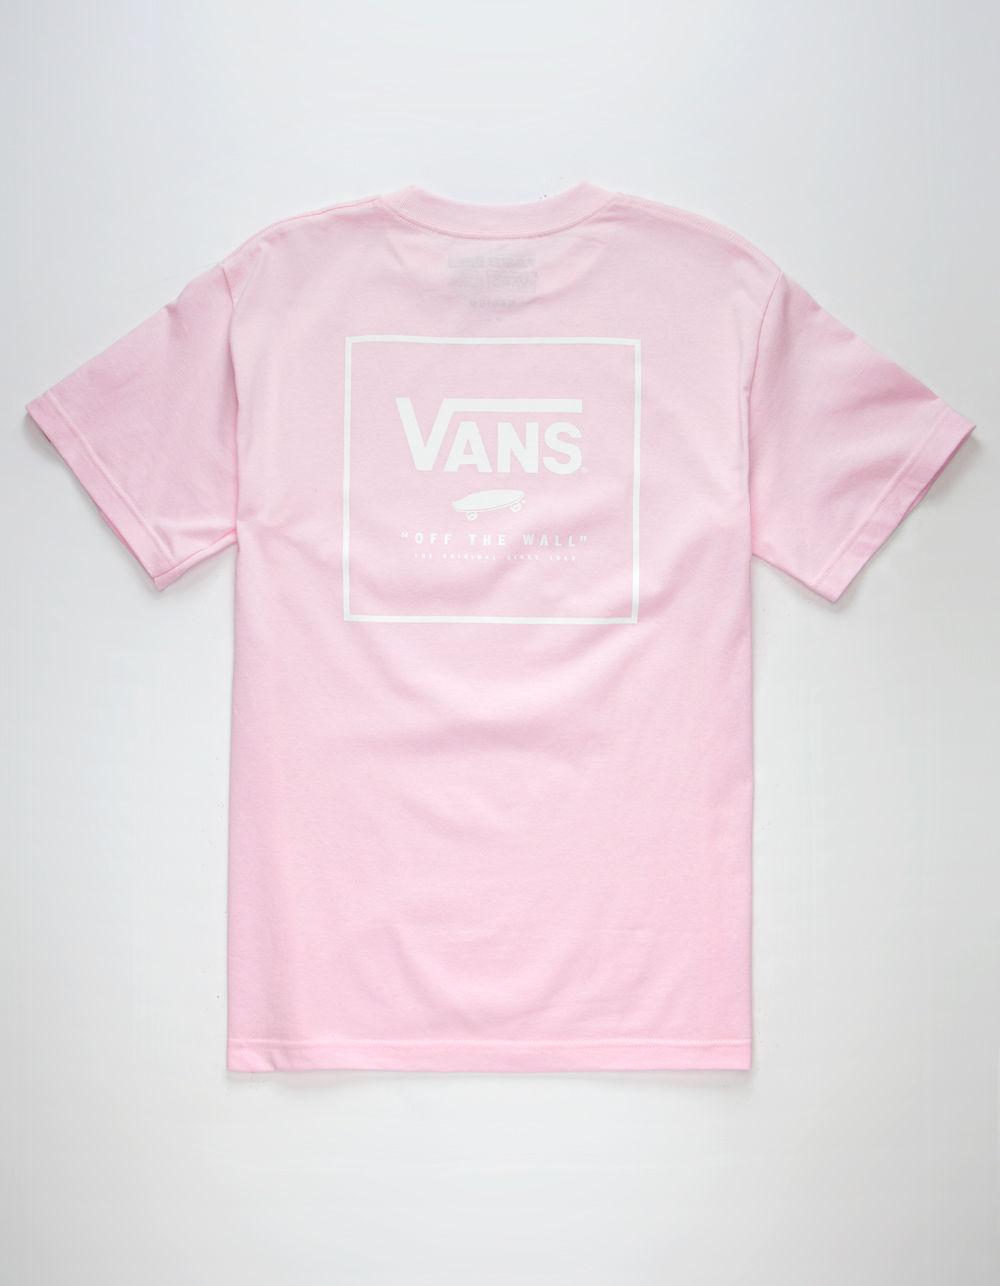 white and pink vans shirt 